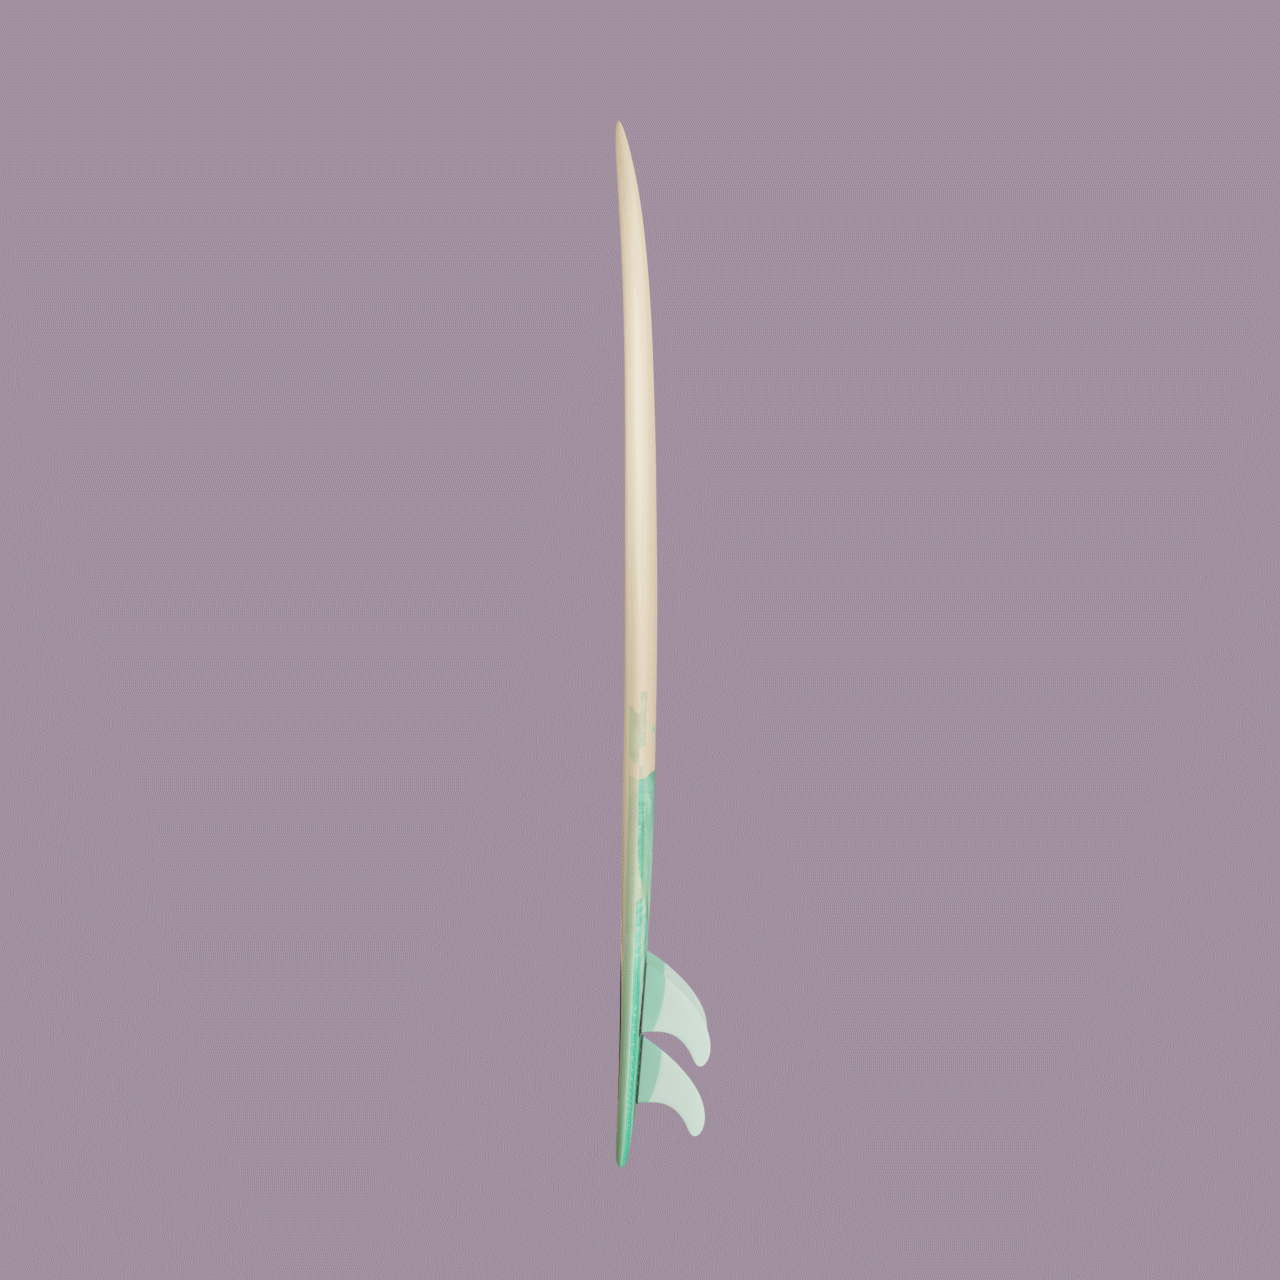 Coco Ho Surfboard (Series 1) #0174